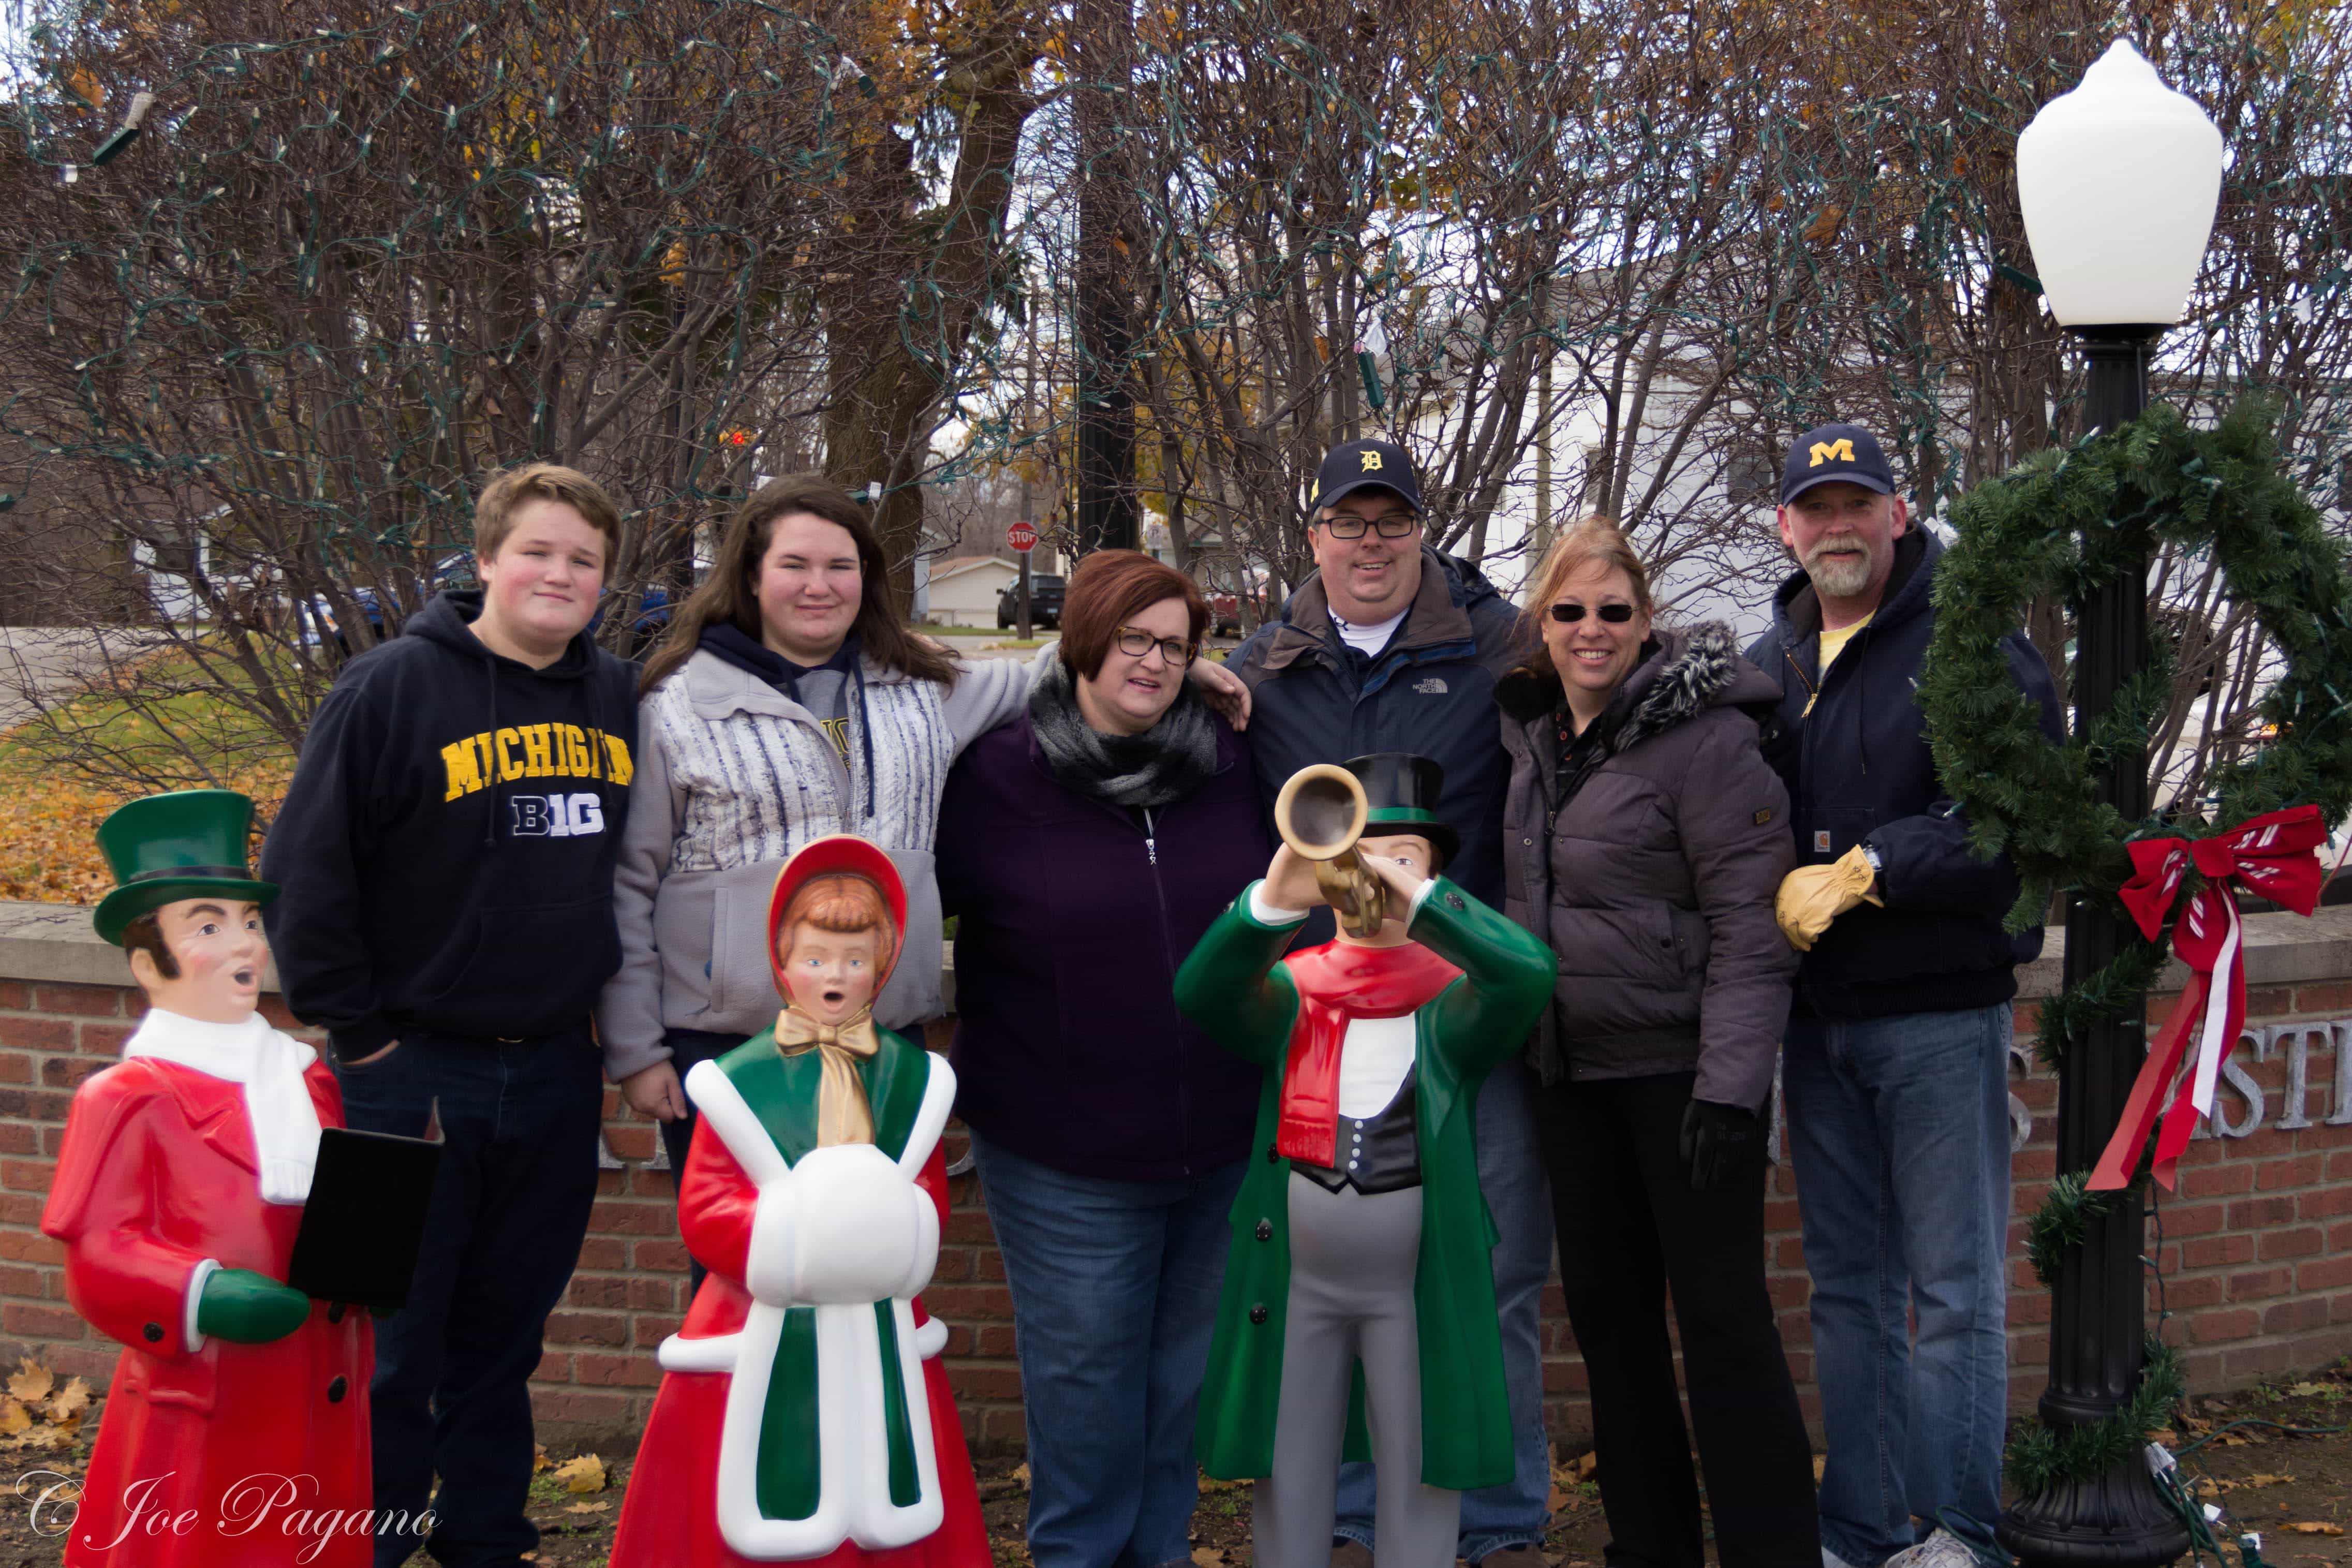 New Holiday Décor on Garden Boulevard Flat Rock, Mi thanks to Volunteers